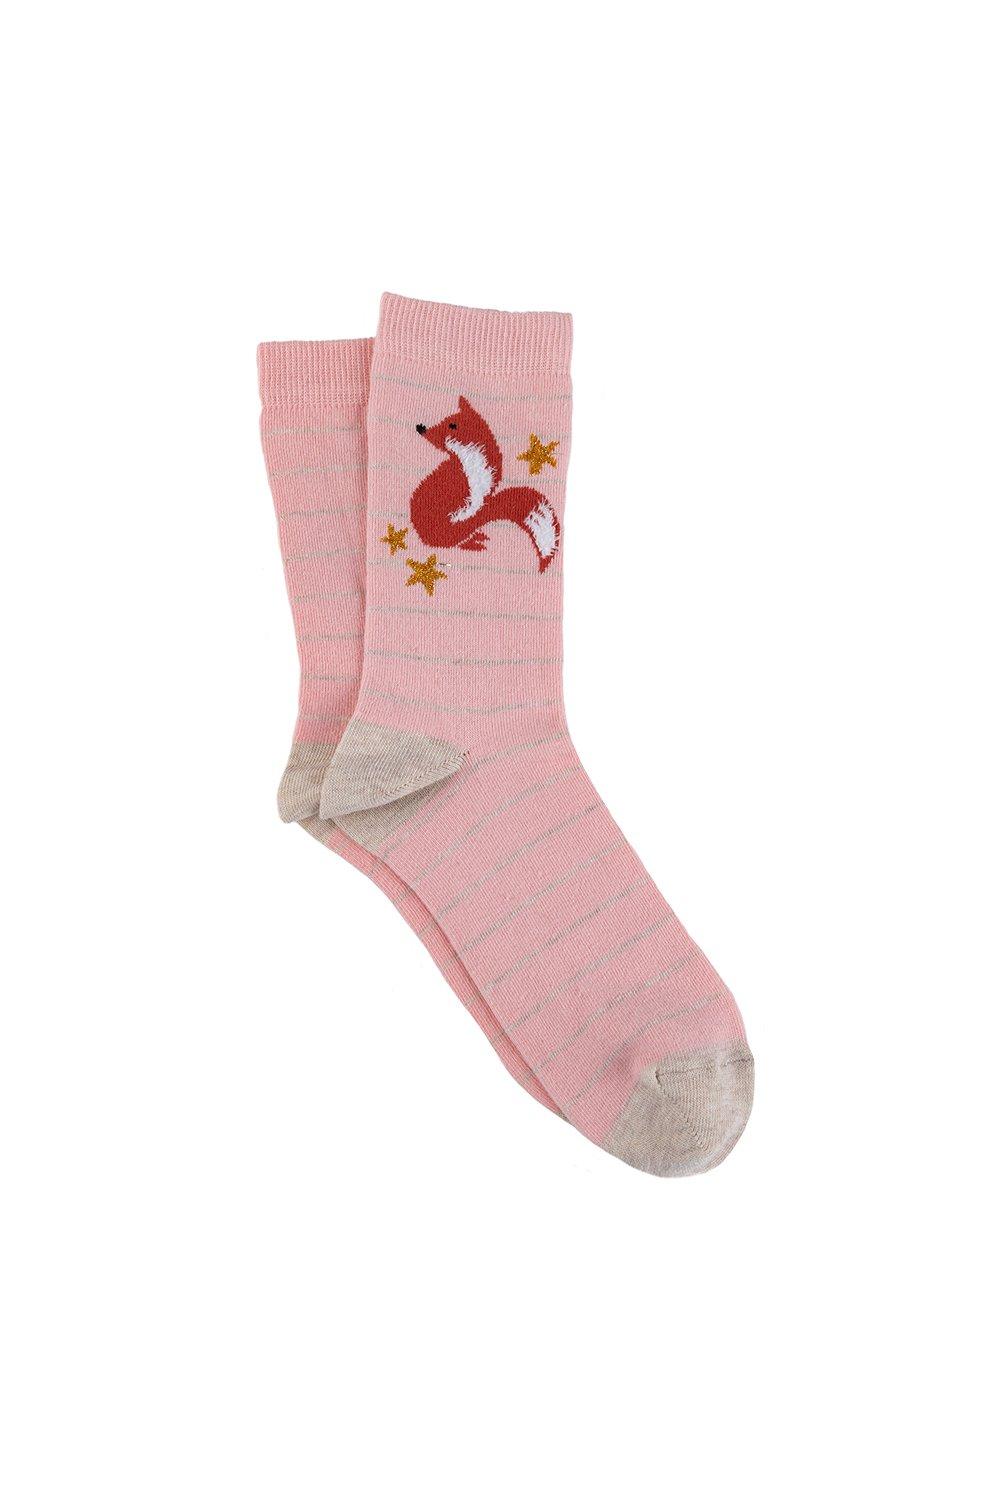 Single Pack of Blush Pink Fox Print Un-Treaded Novelty Ankle Socks